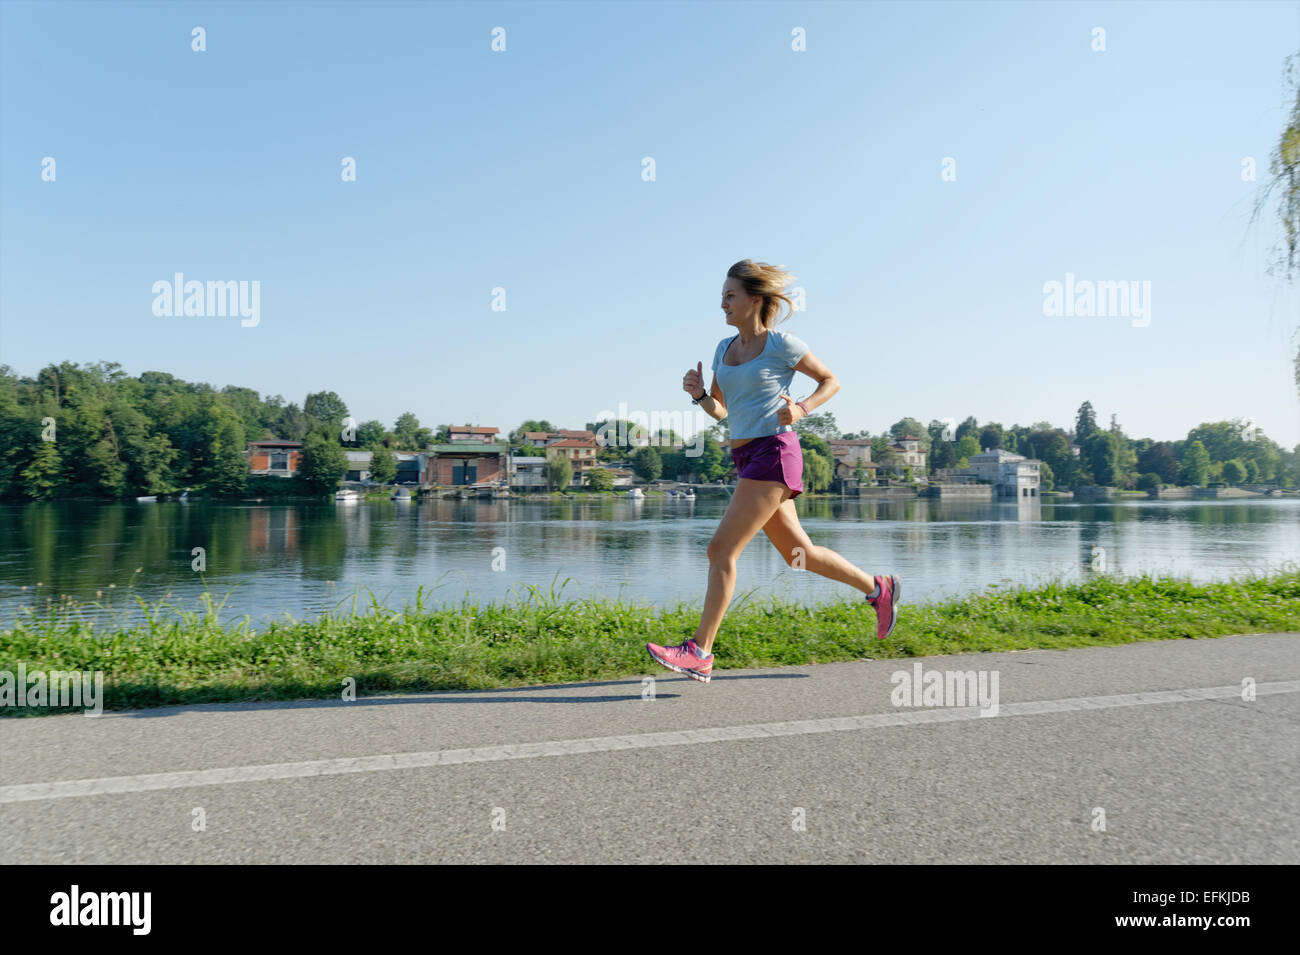 Mid adult woman running on road alongside lake Stock Photo